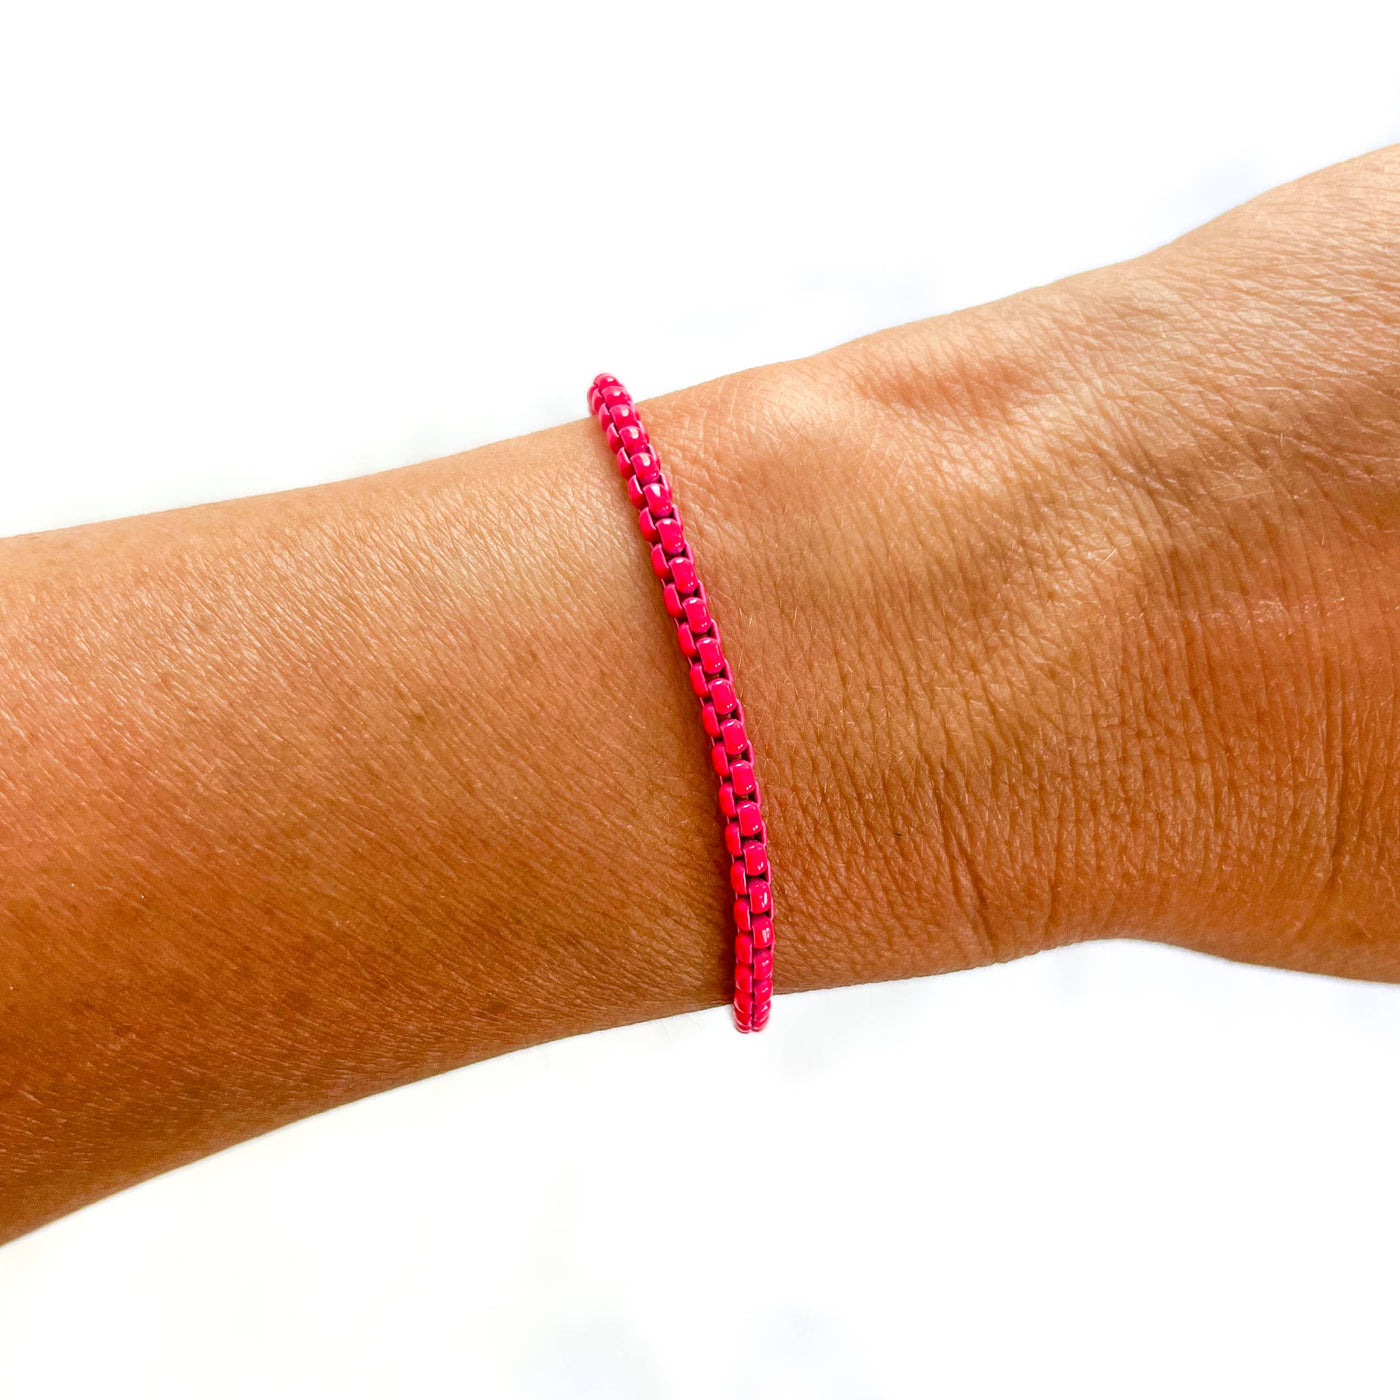 Chain link bracelet - Neon Pink